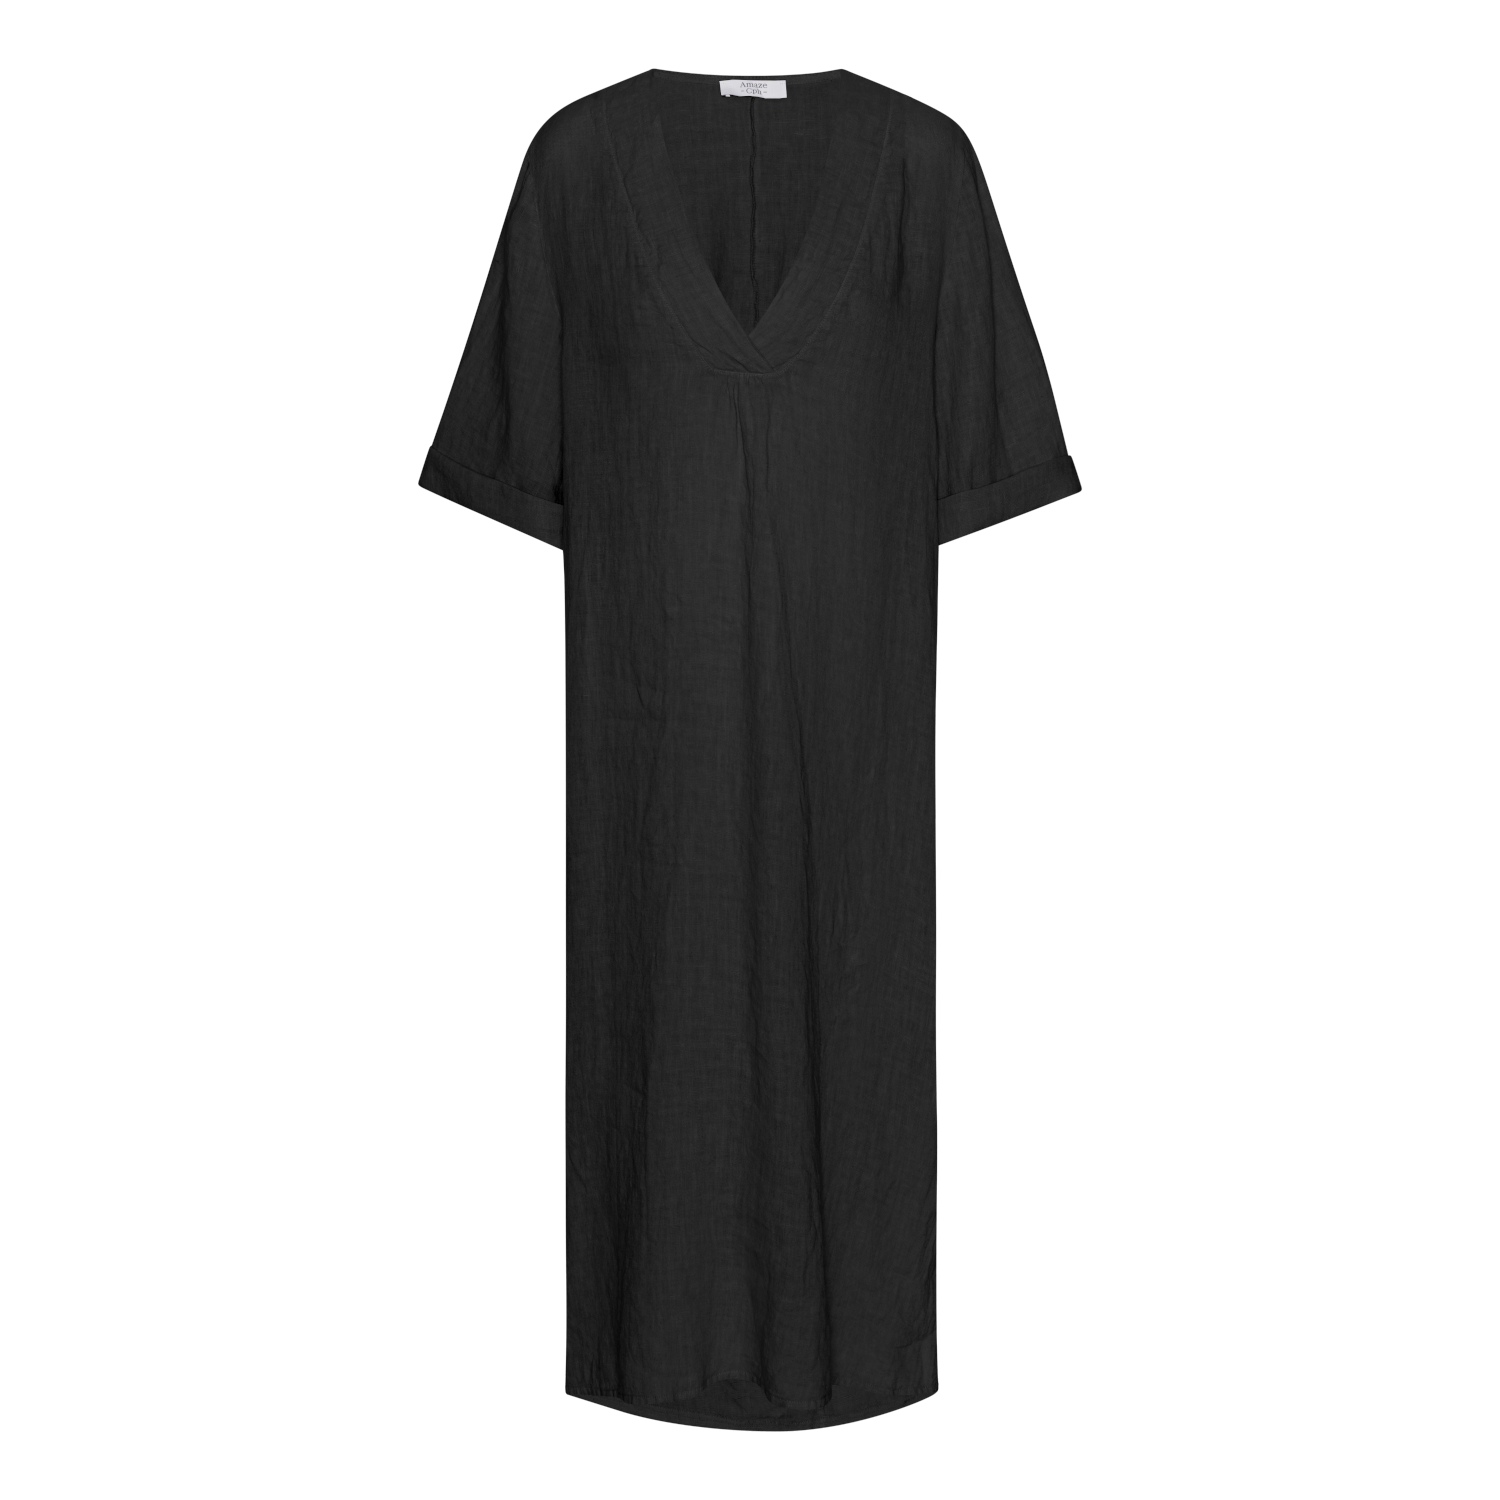 Linen Dress - Black - Amaze Cph - Black - S/M